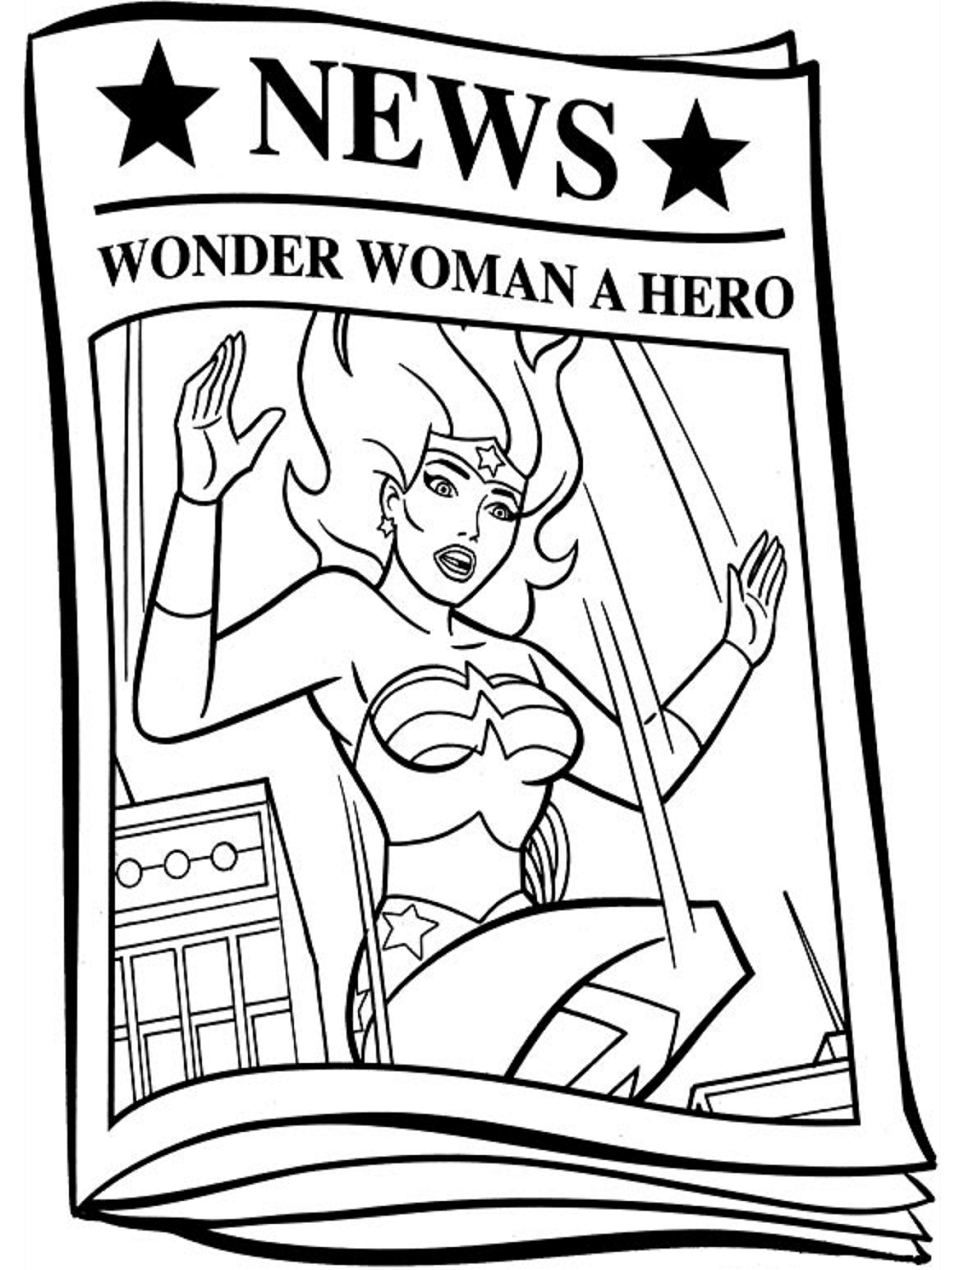 News About Wonder Woman